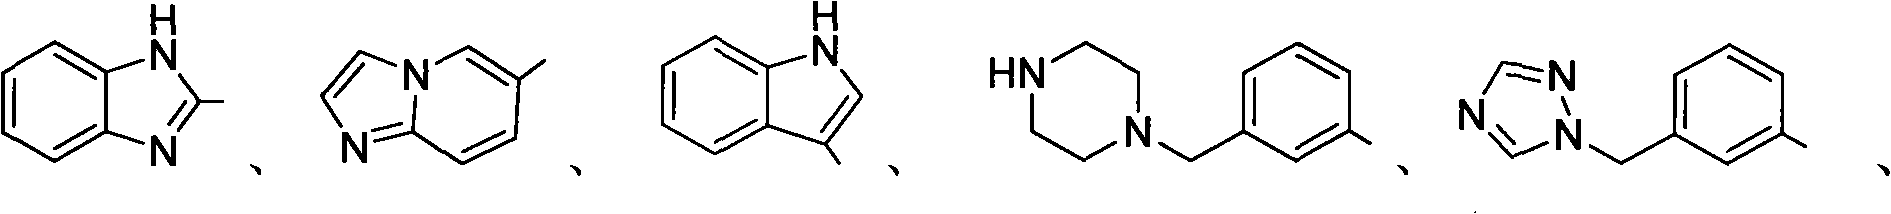 Trifluoromethylation of trifluoromethyl aryl sulfonium salt to heterocyclic compound under metal trigger